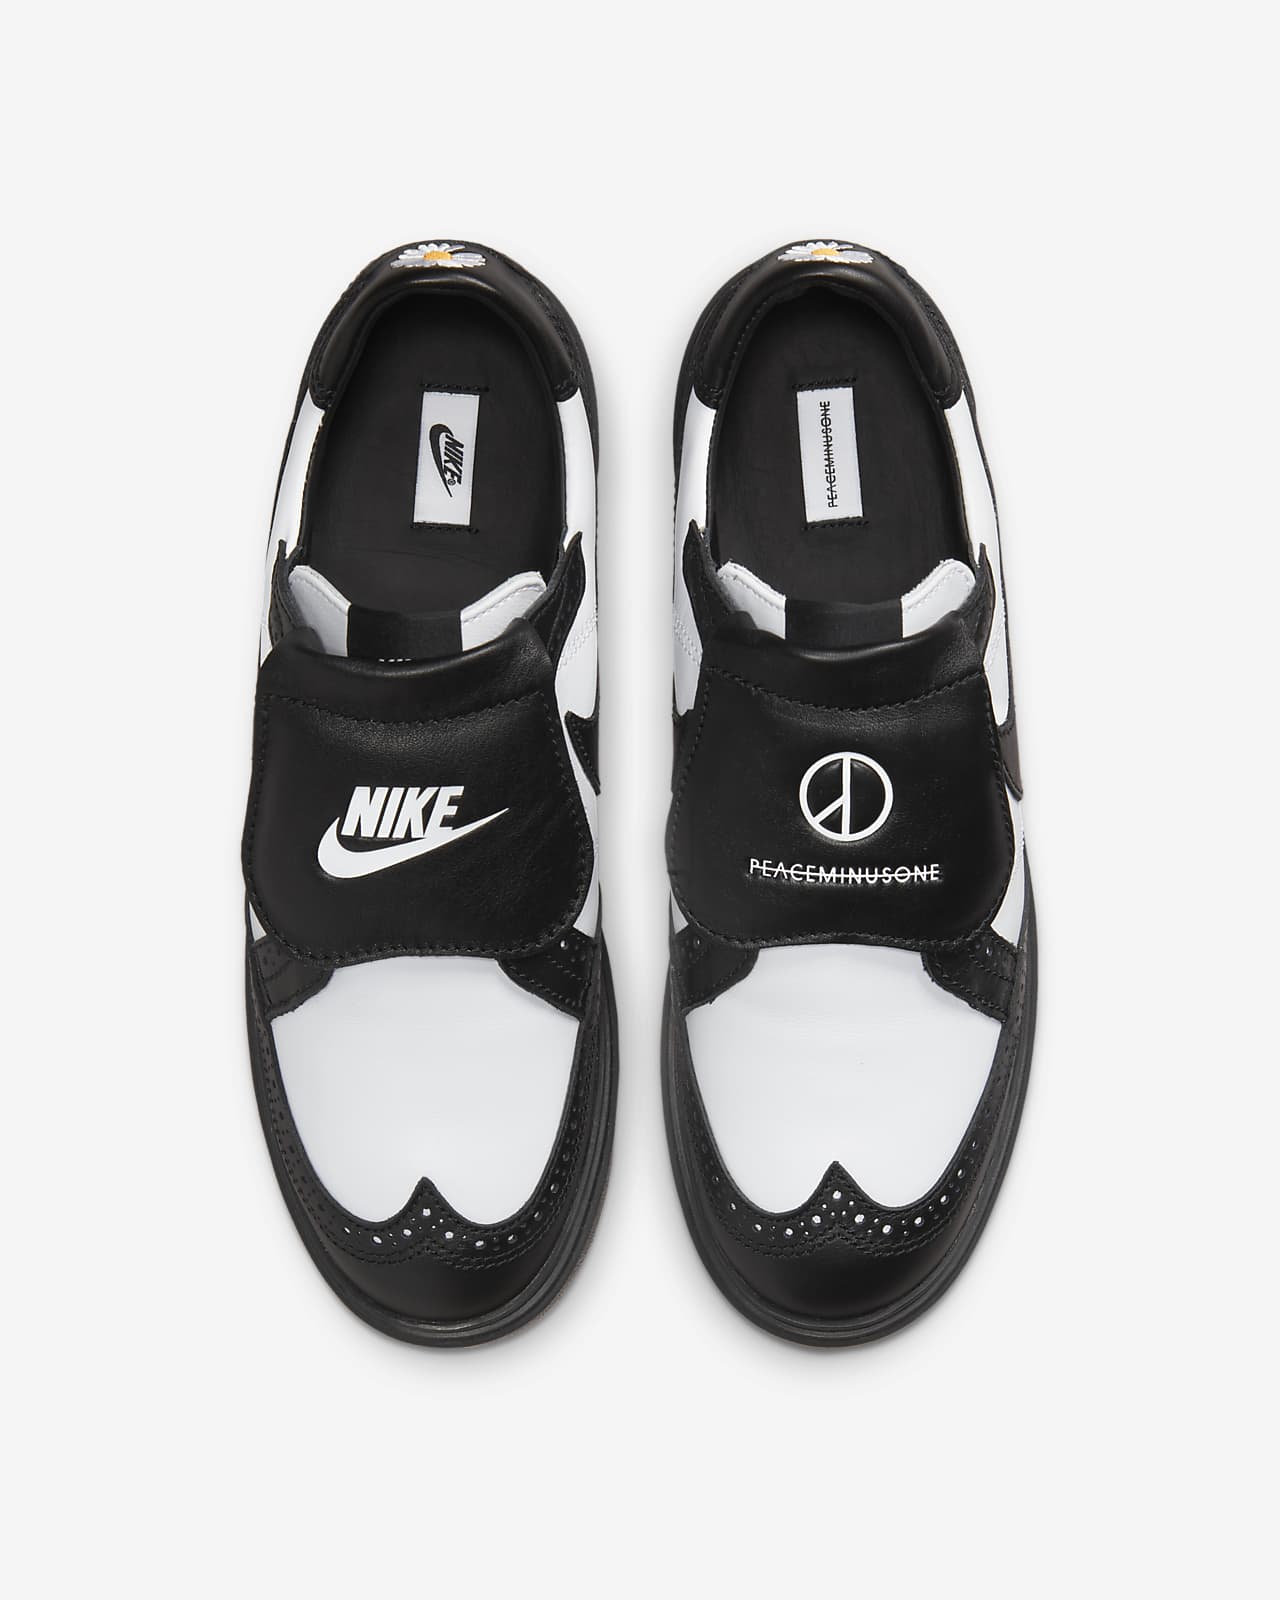 Nike Kwondo 1 x PEACEMINUSONE Shoes